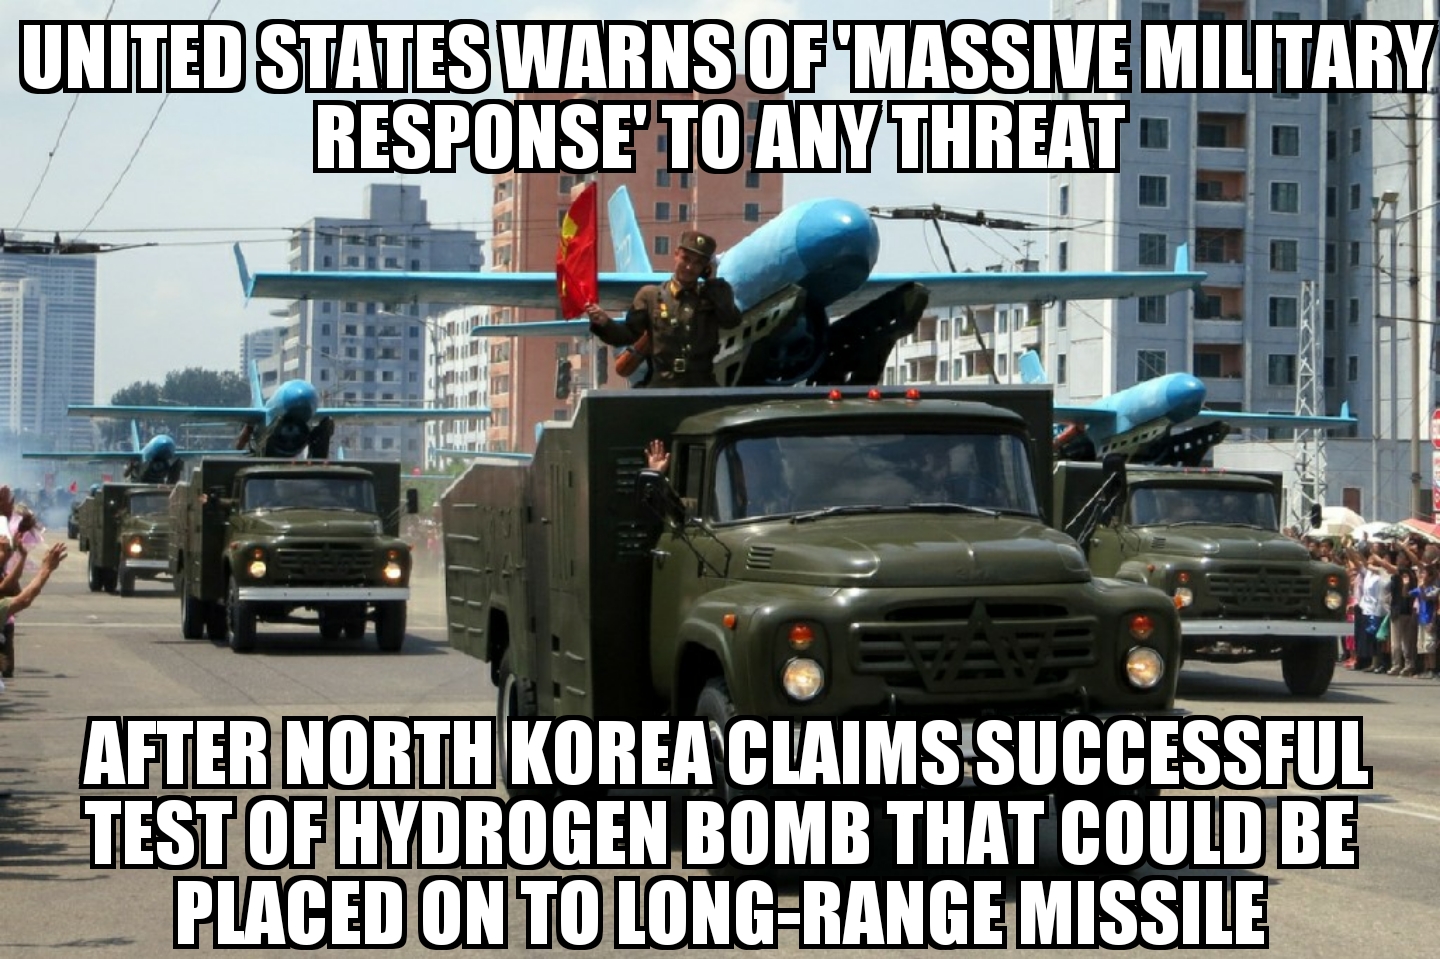 U.S. warns of ‘massive’ response after North Korea bomb test